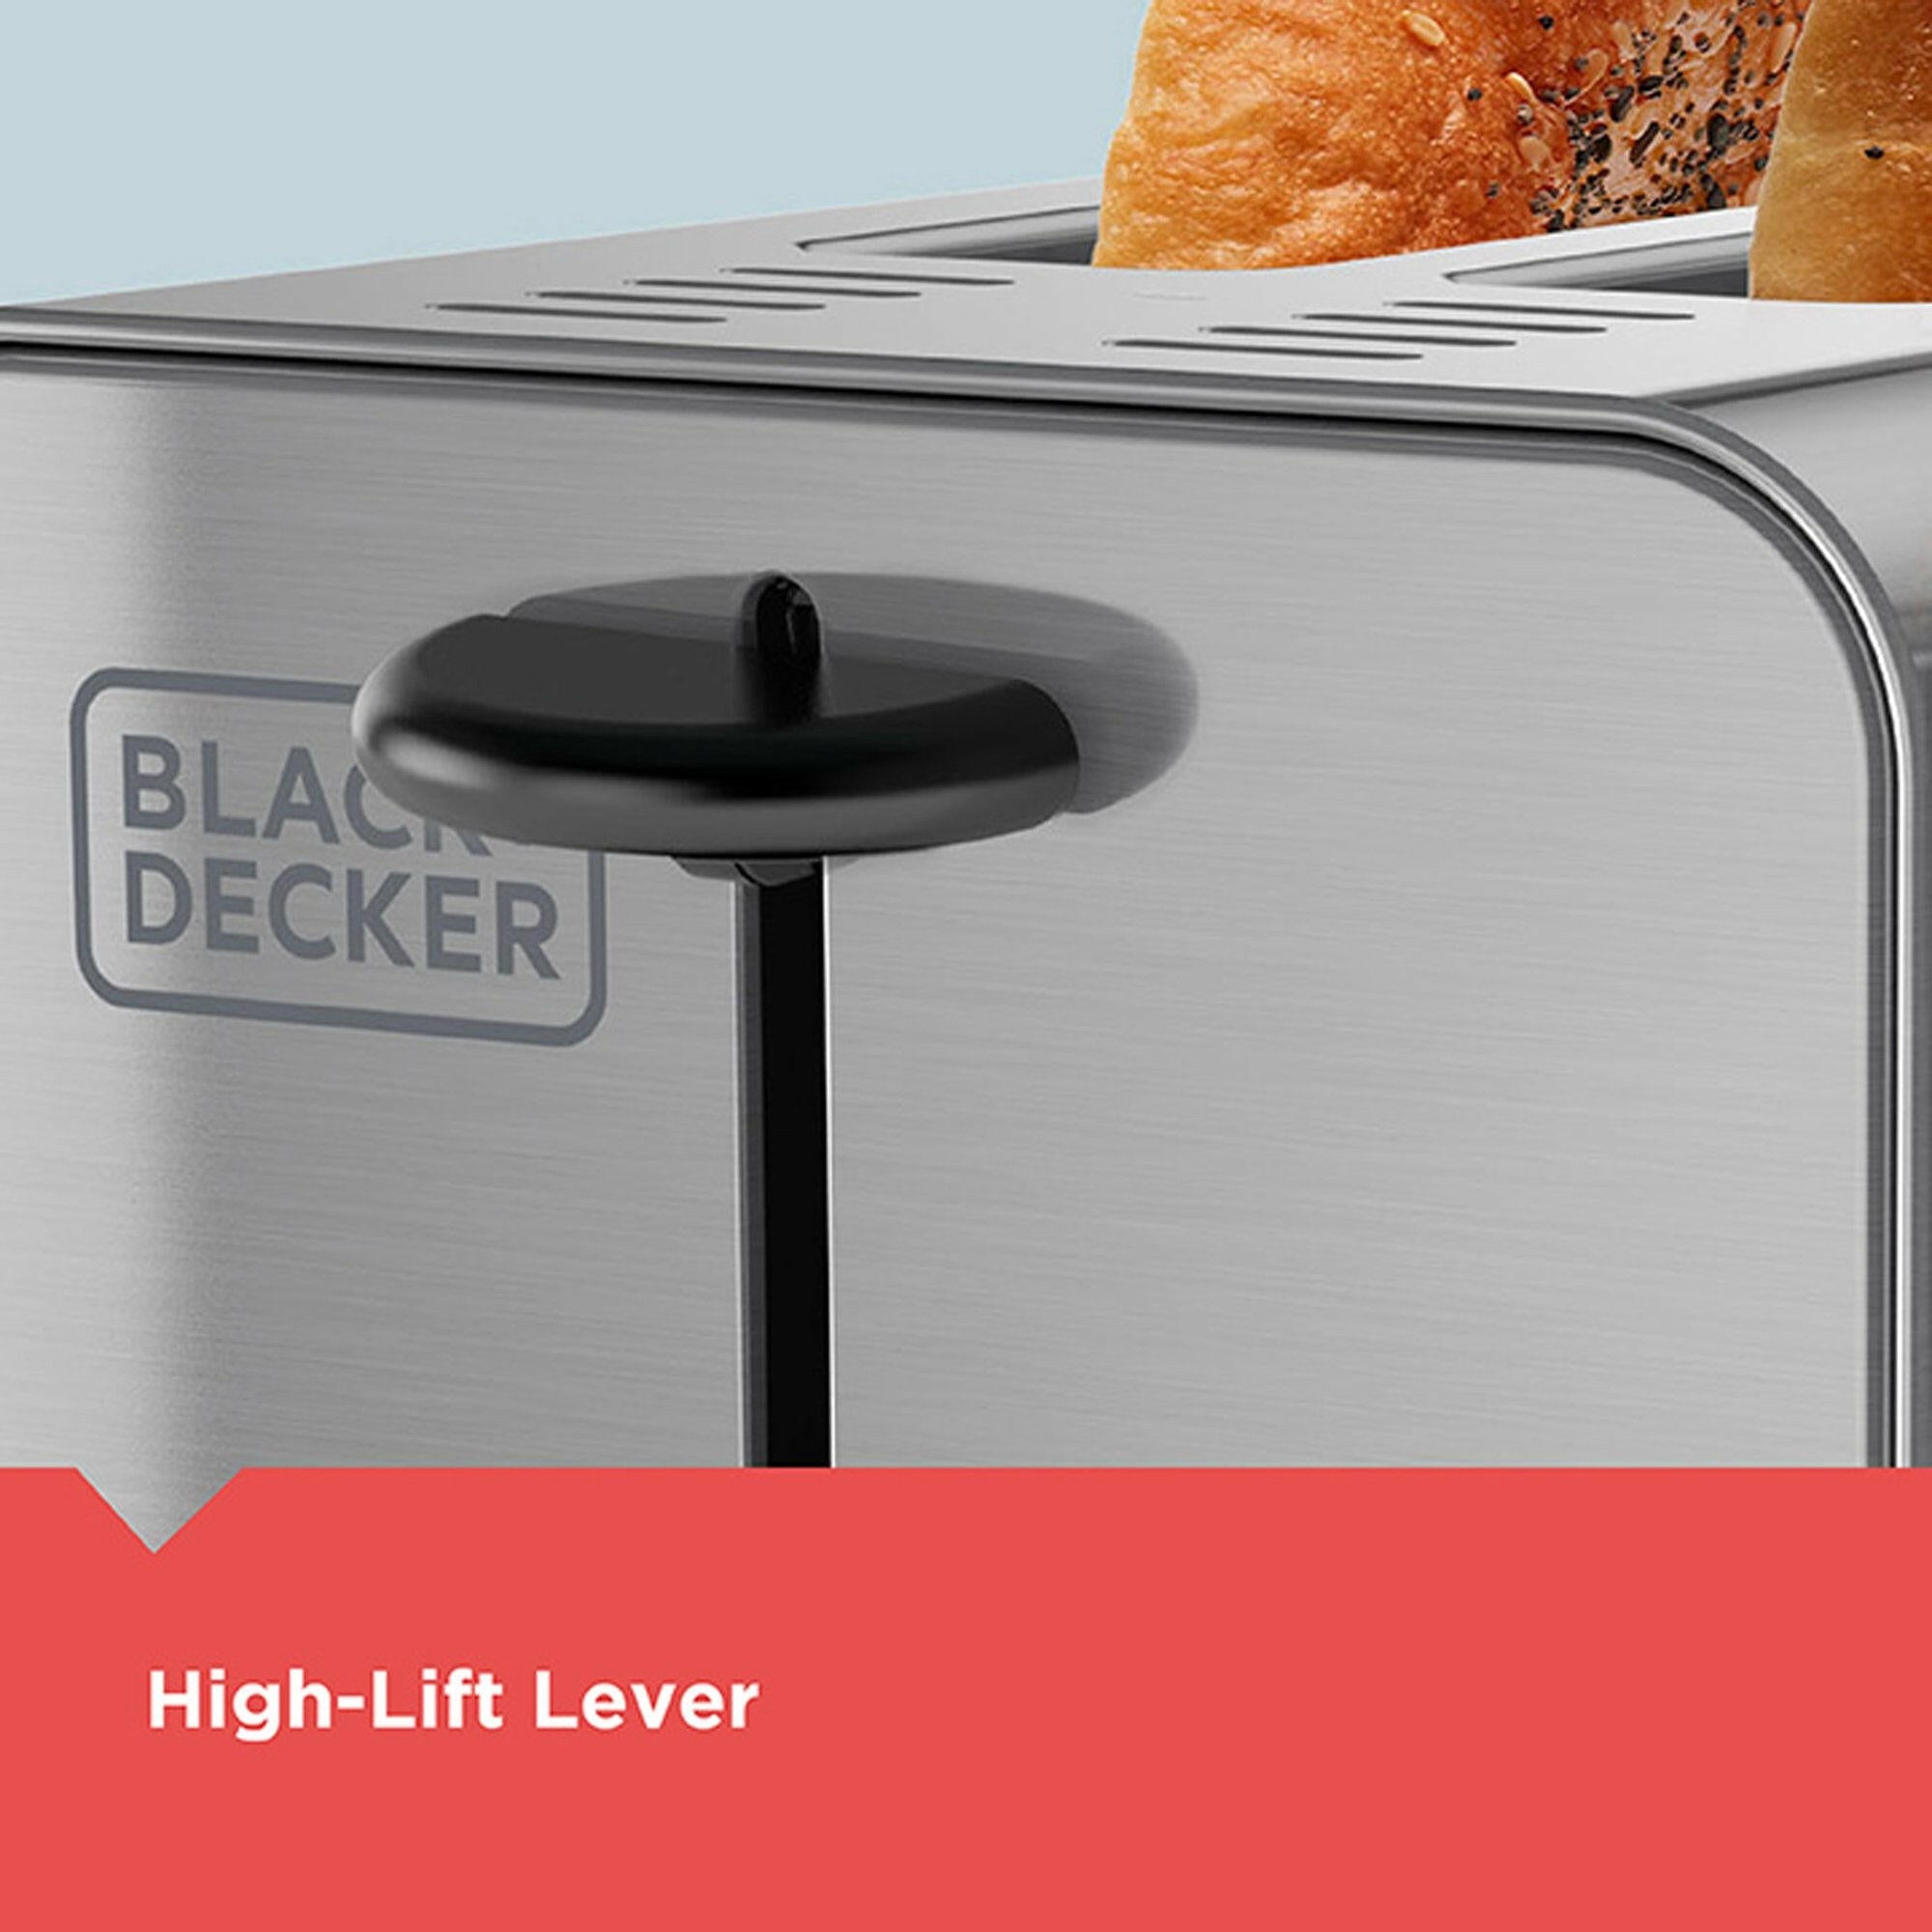 Black+Decker 2 Slice Stainless Steel Toaster.